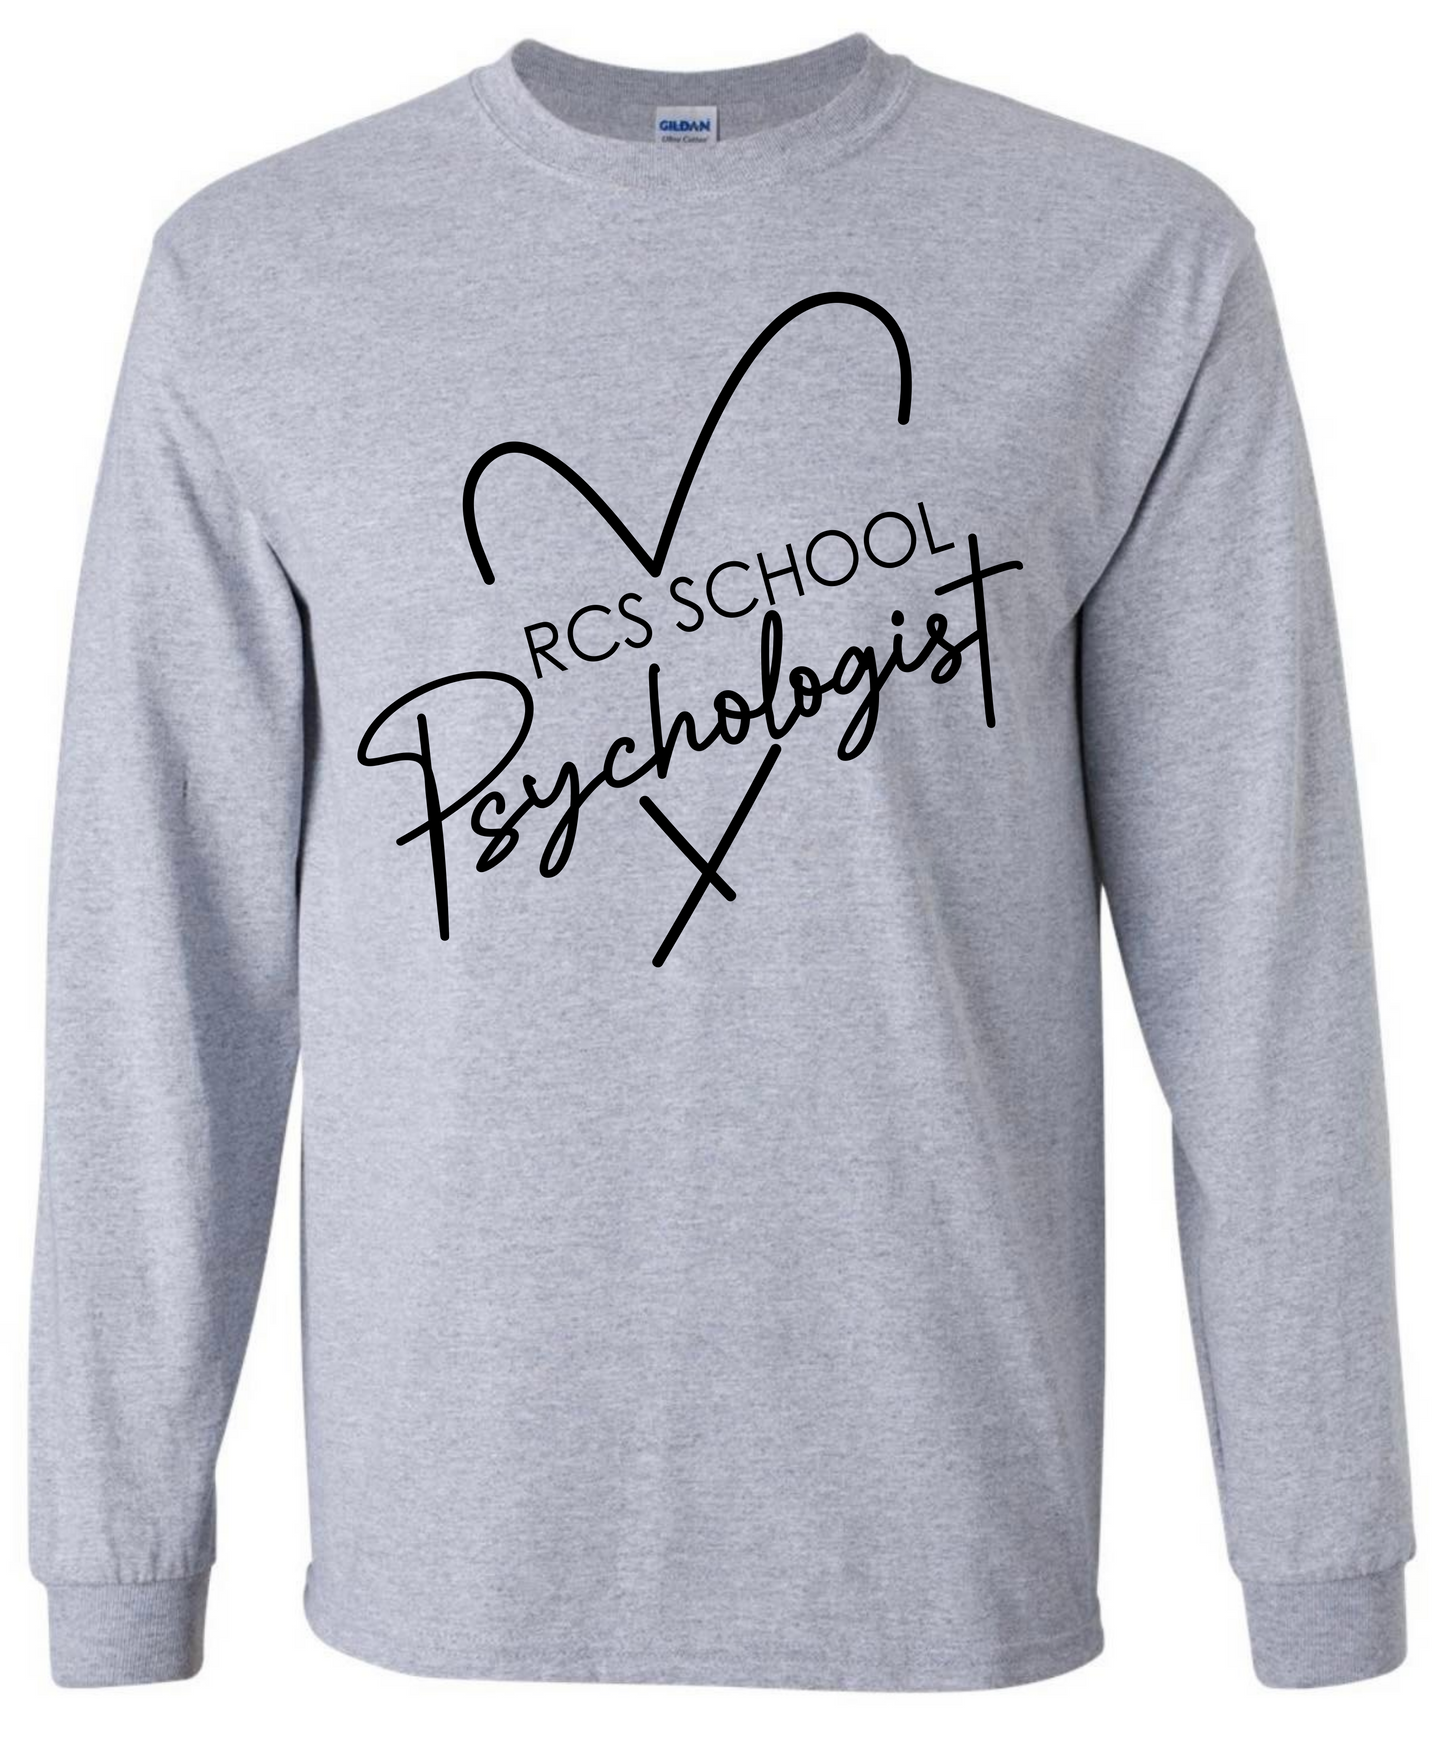 RCS School Psychologist Heart Design Longsleeve Tshirt